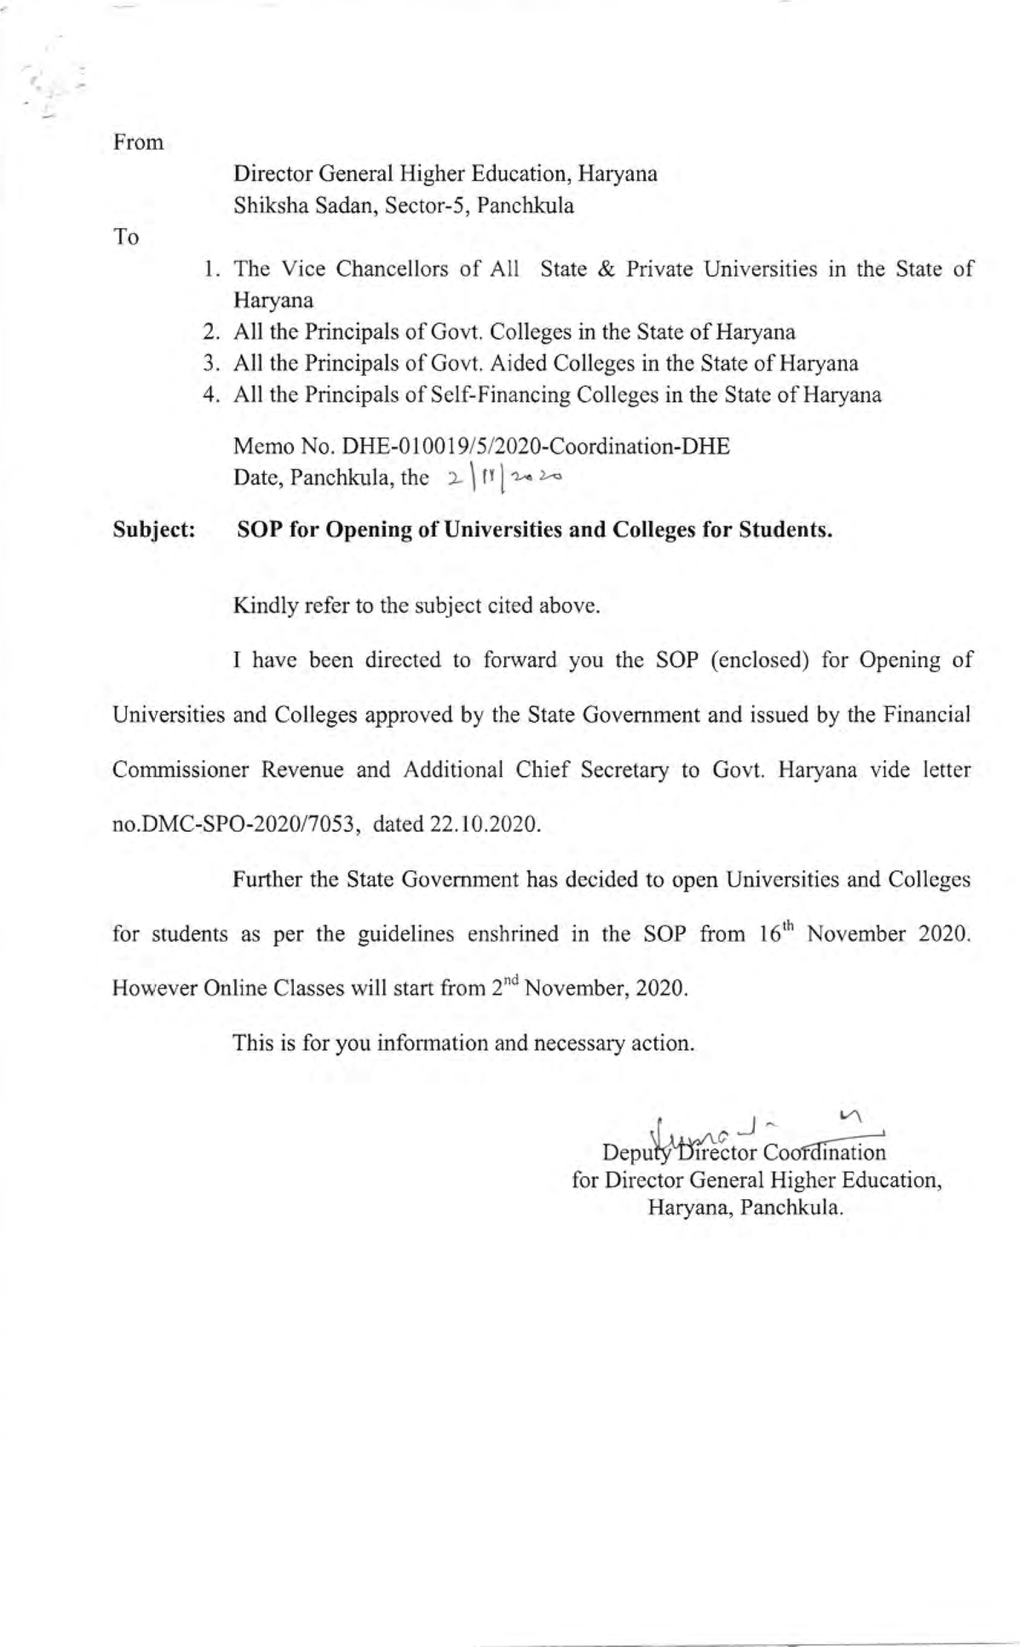 O.Puffi8tl'. C"*A;Ili for Director General Higher Education, Haryana, Panchkula